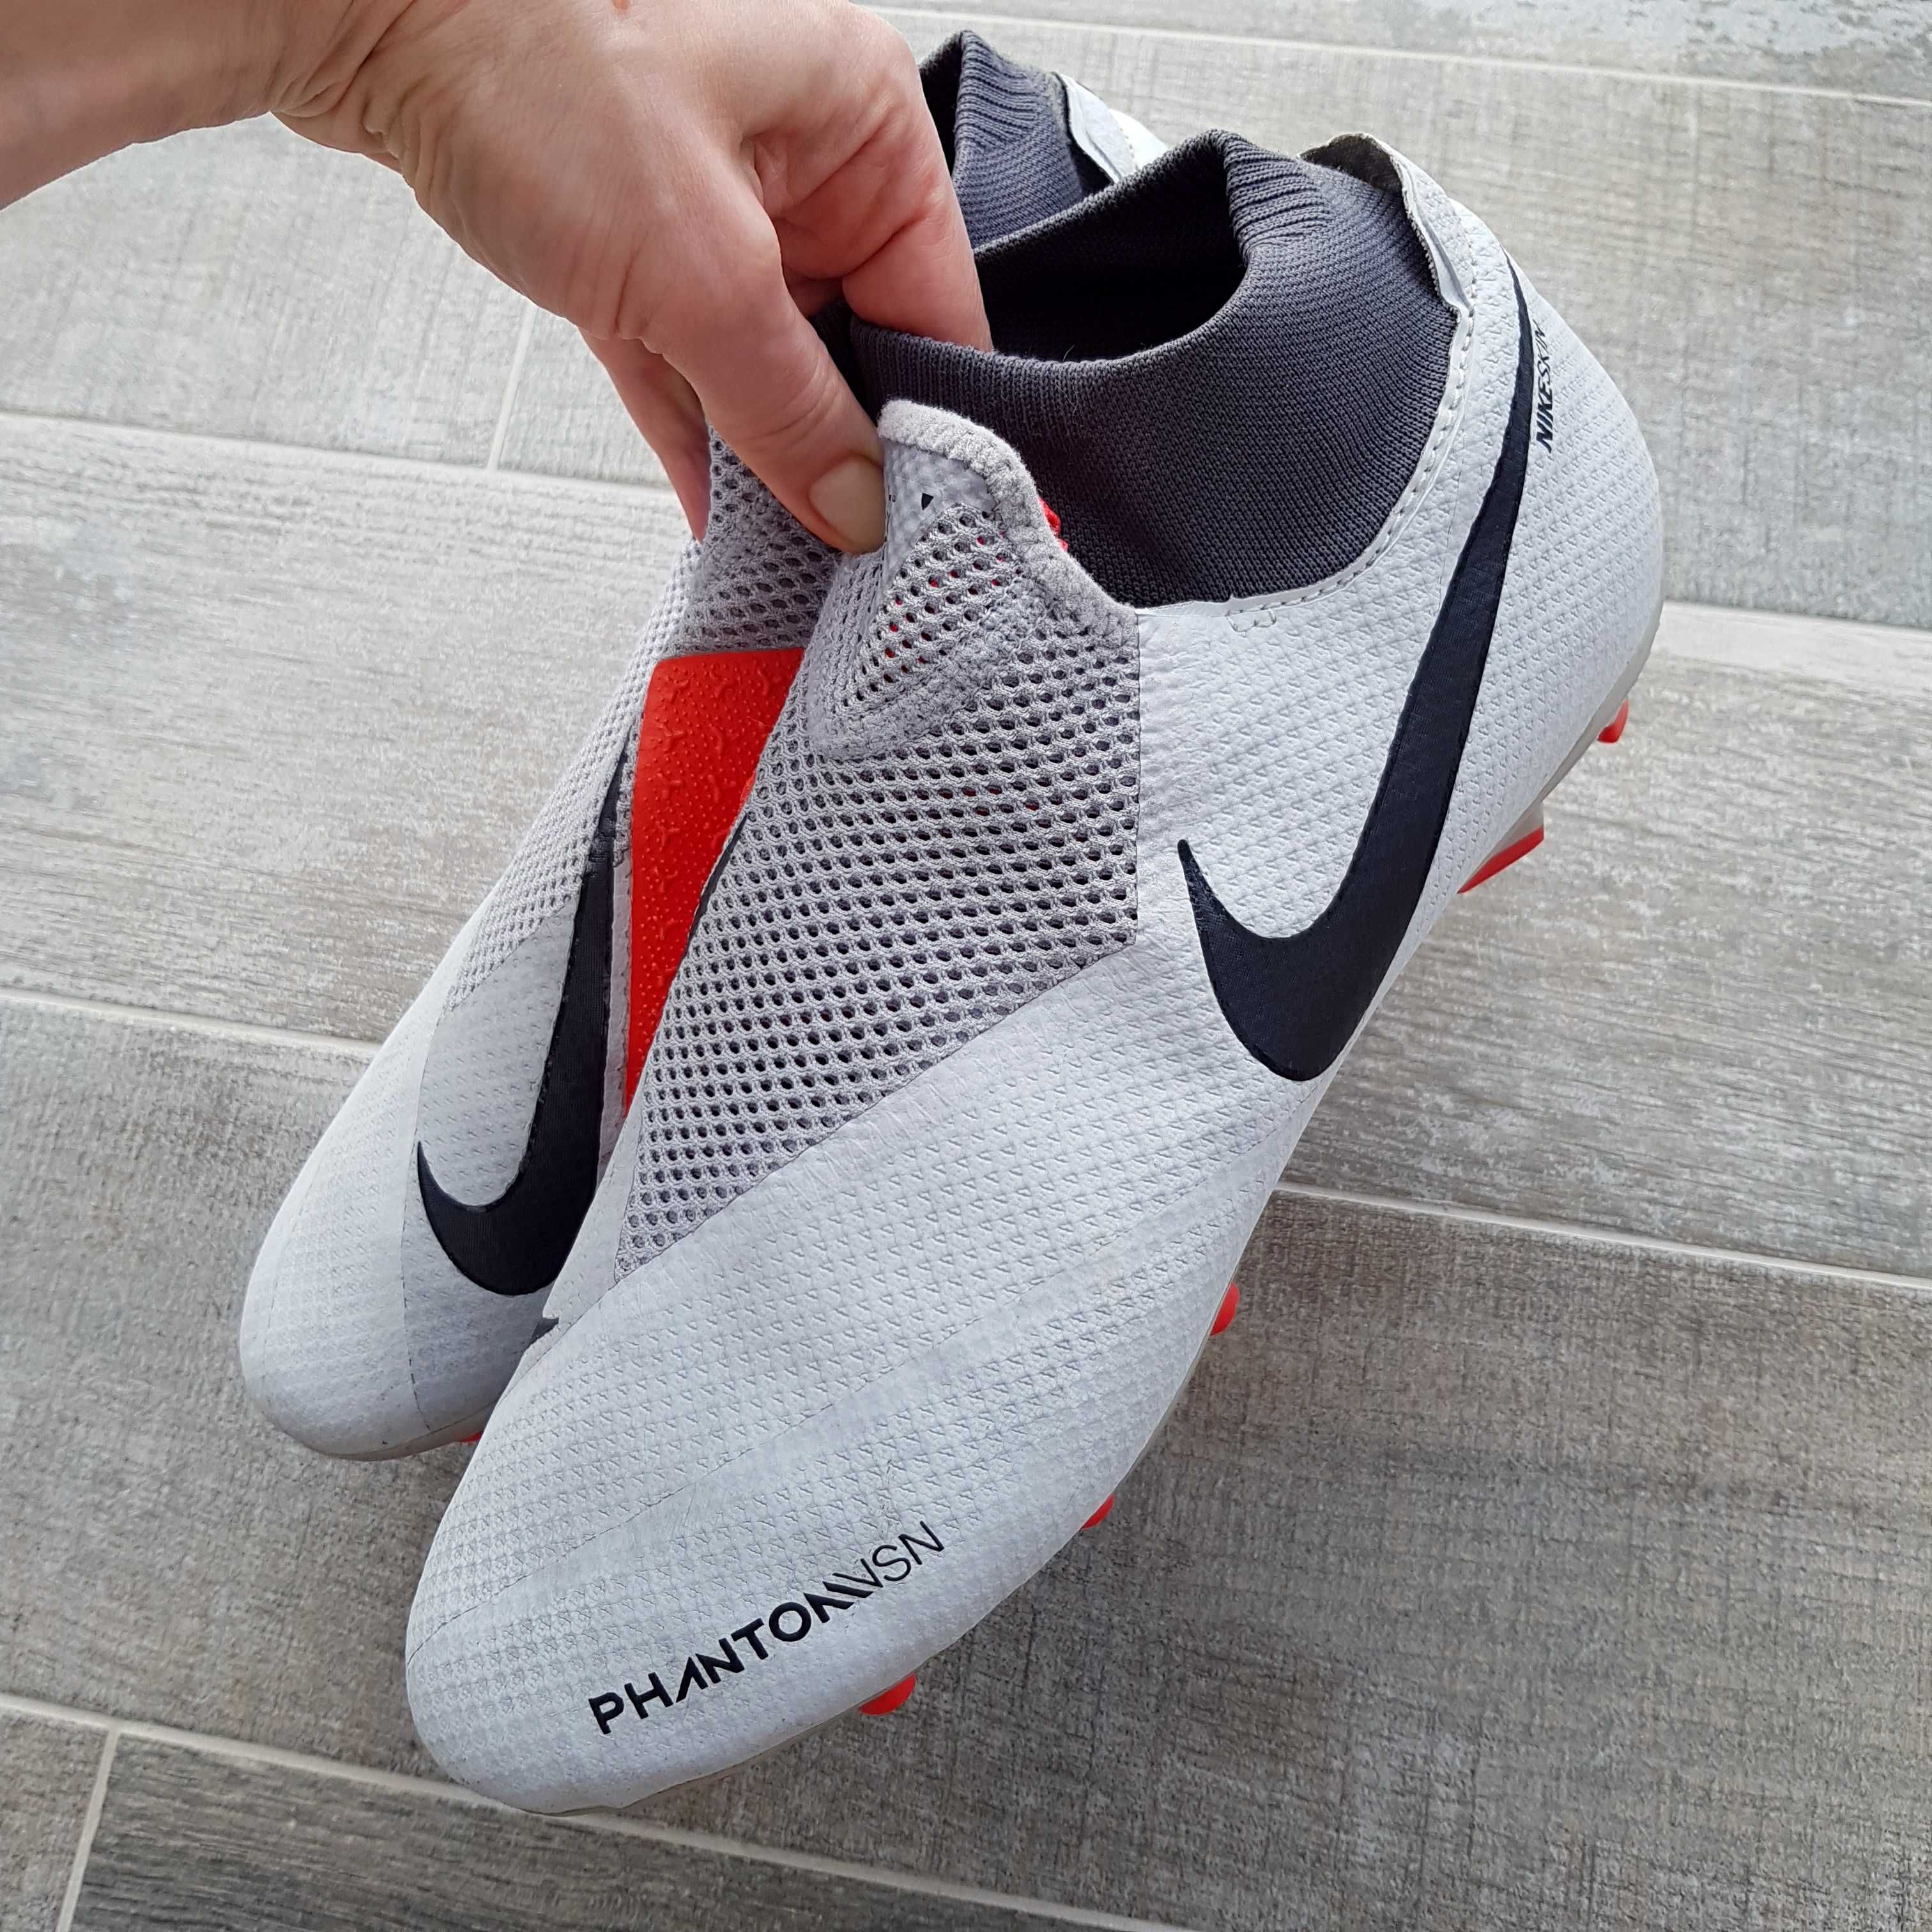 Бутсы копы Nike Phantom VSN Pro р. 45